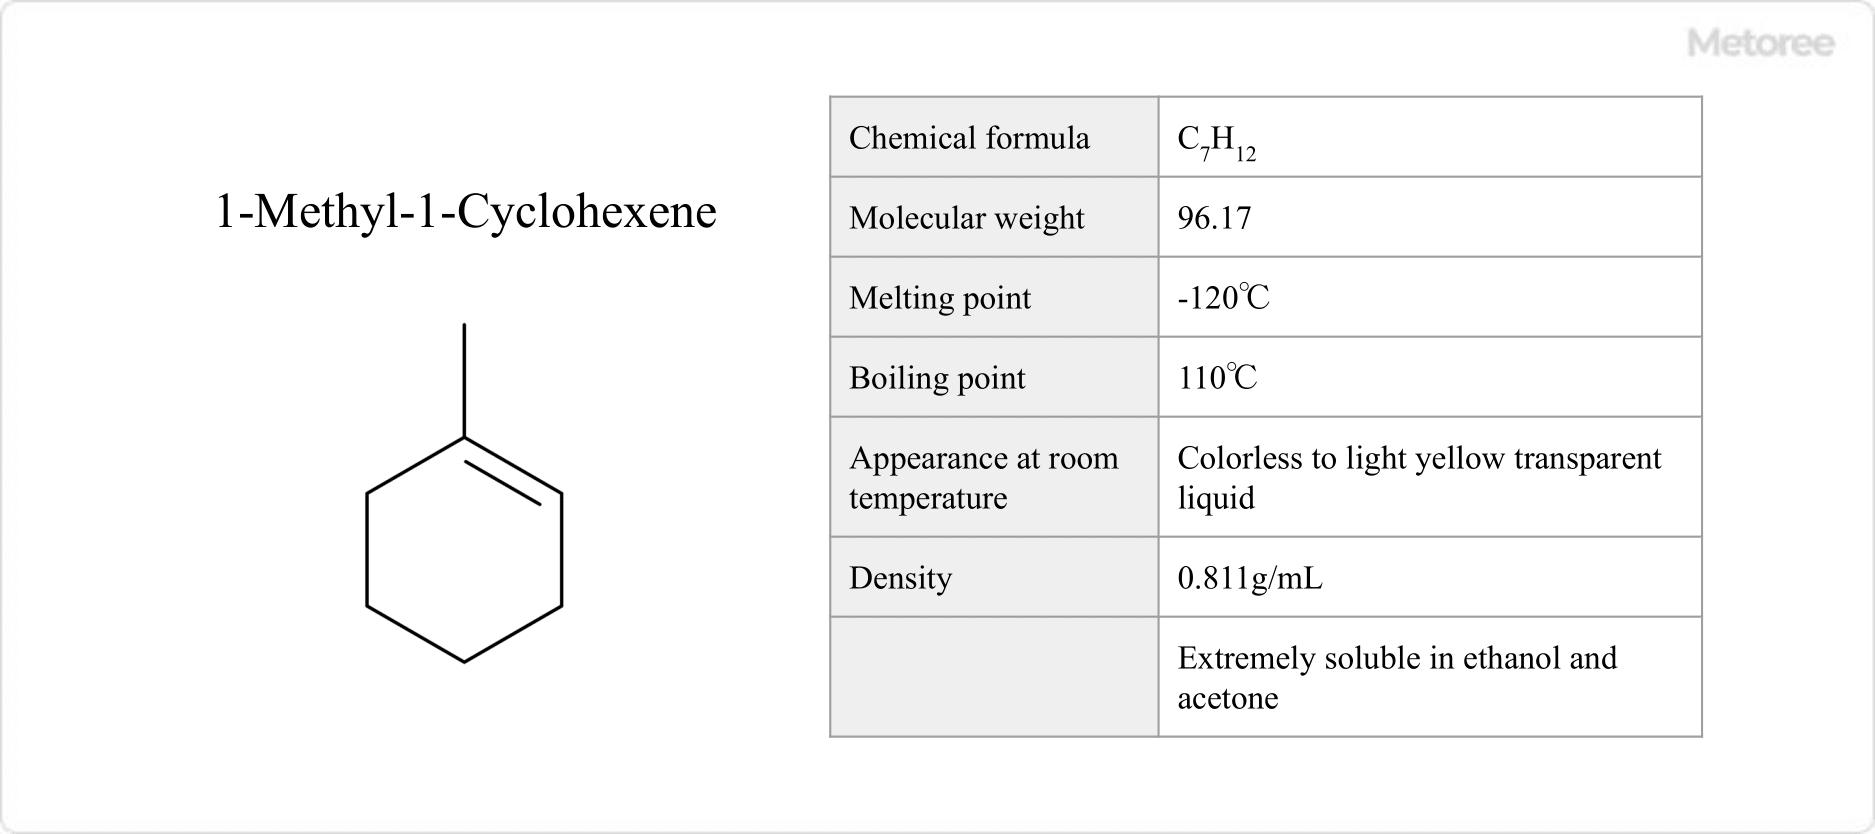 Figure 1. Basic information on 1-methyl-1-cyclohexene